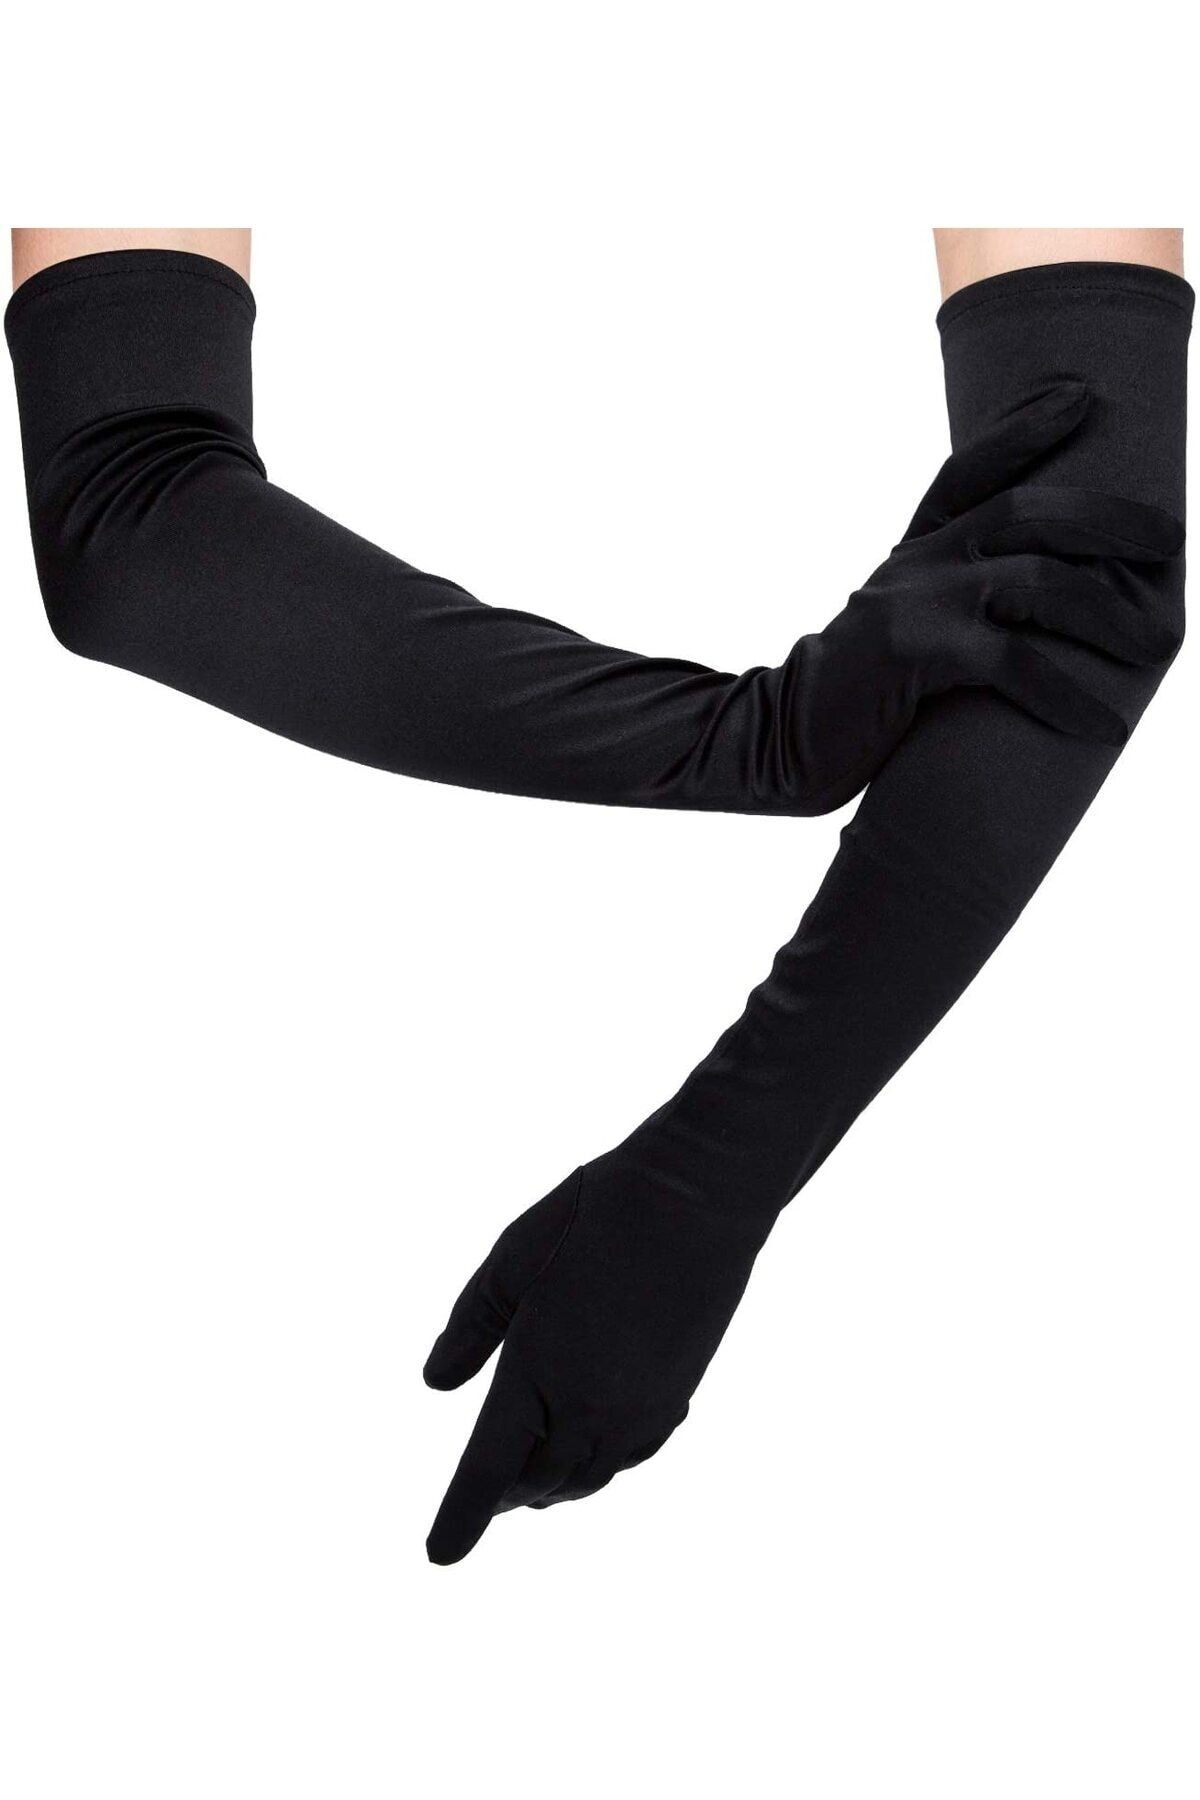 Miss Lancy Saten Likrali Uzun Parmaklı Siyah Eldiven(58 Cm-dans & Opera Eldiveni)